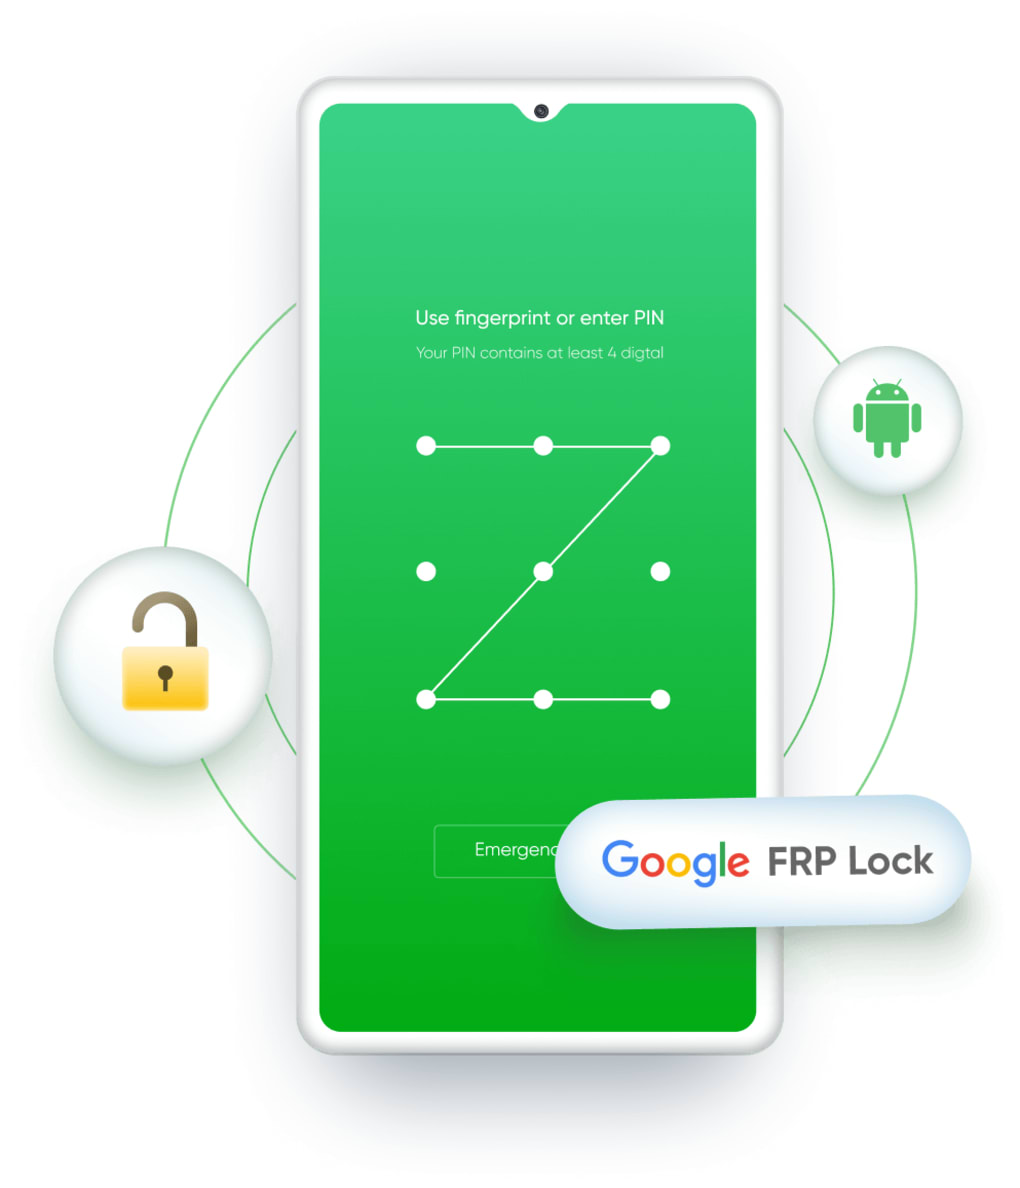 PassFab Android Unlocker - Download